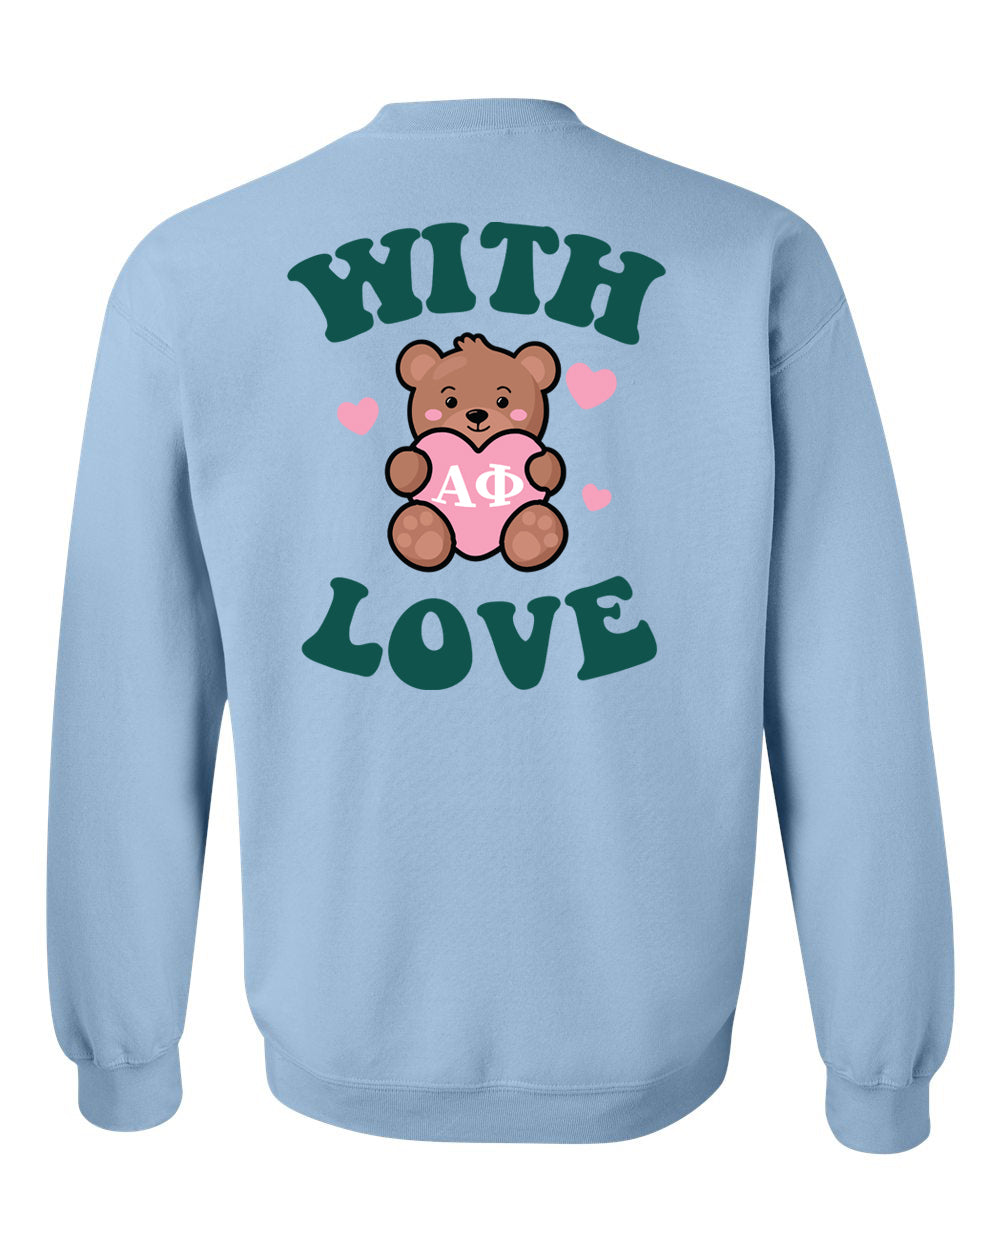 a light blue sweatshirt with a teddy bear holding a heart